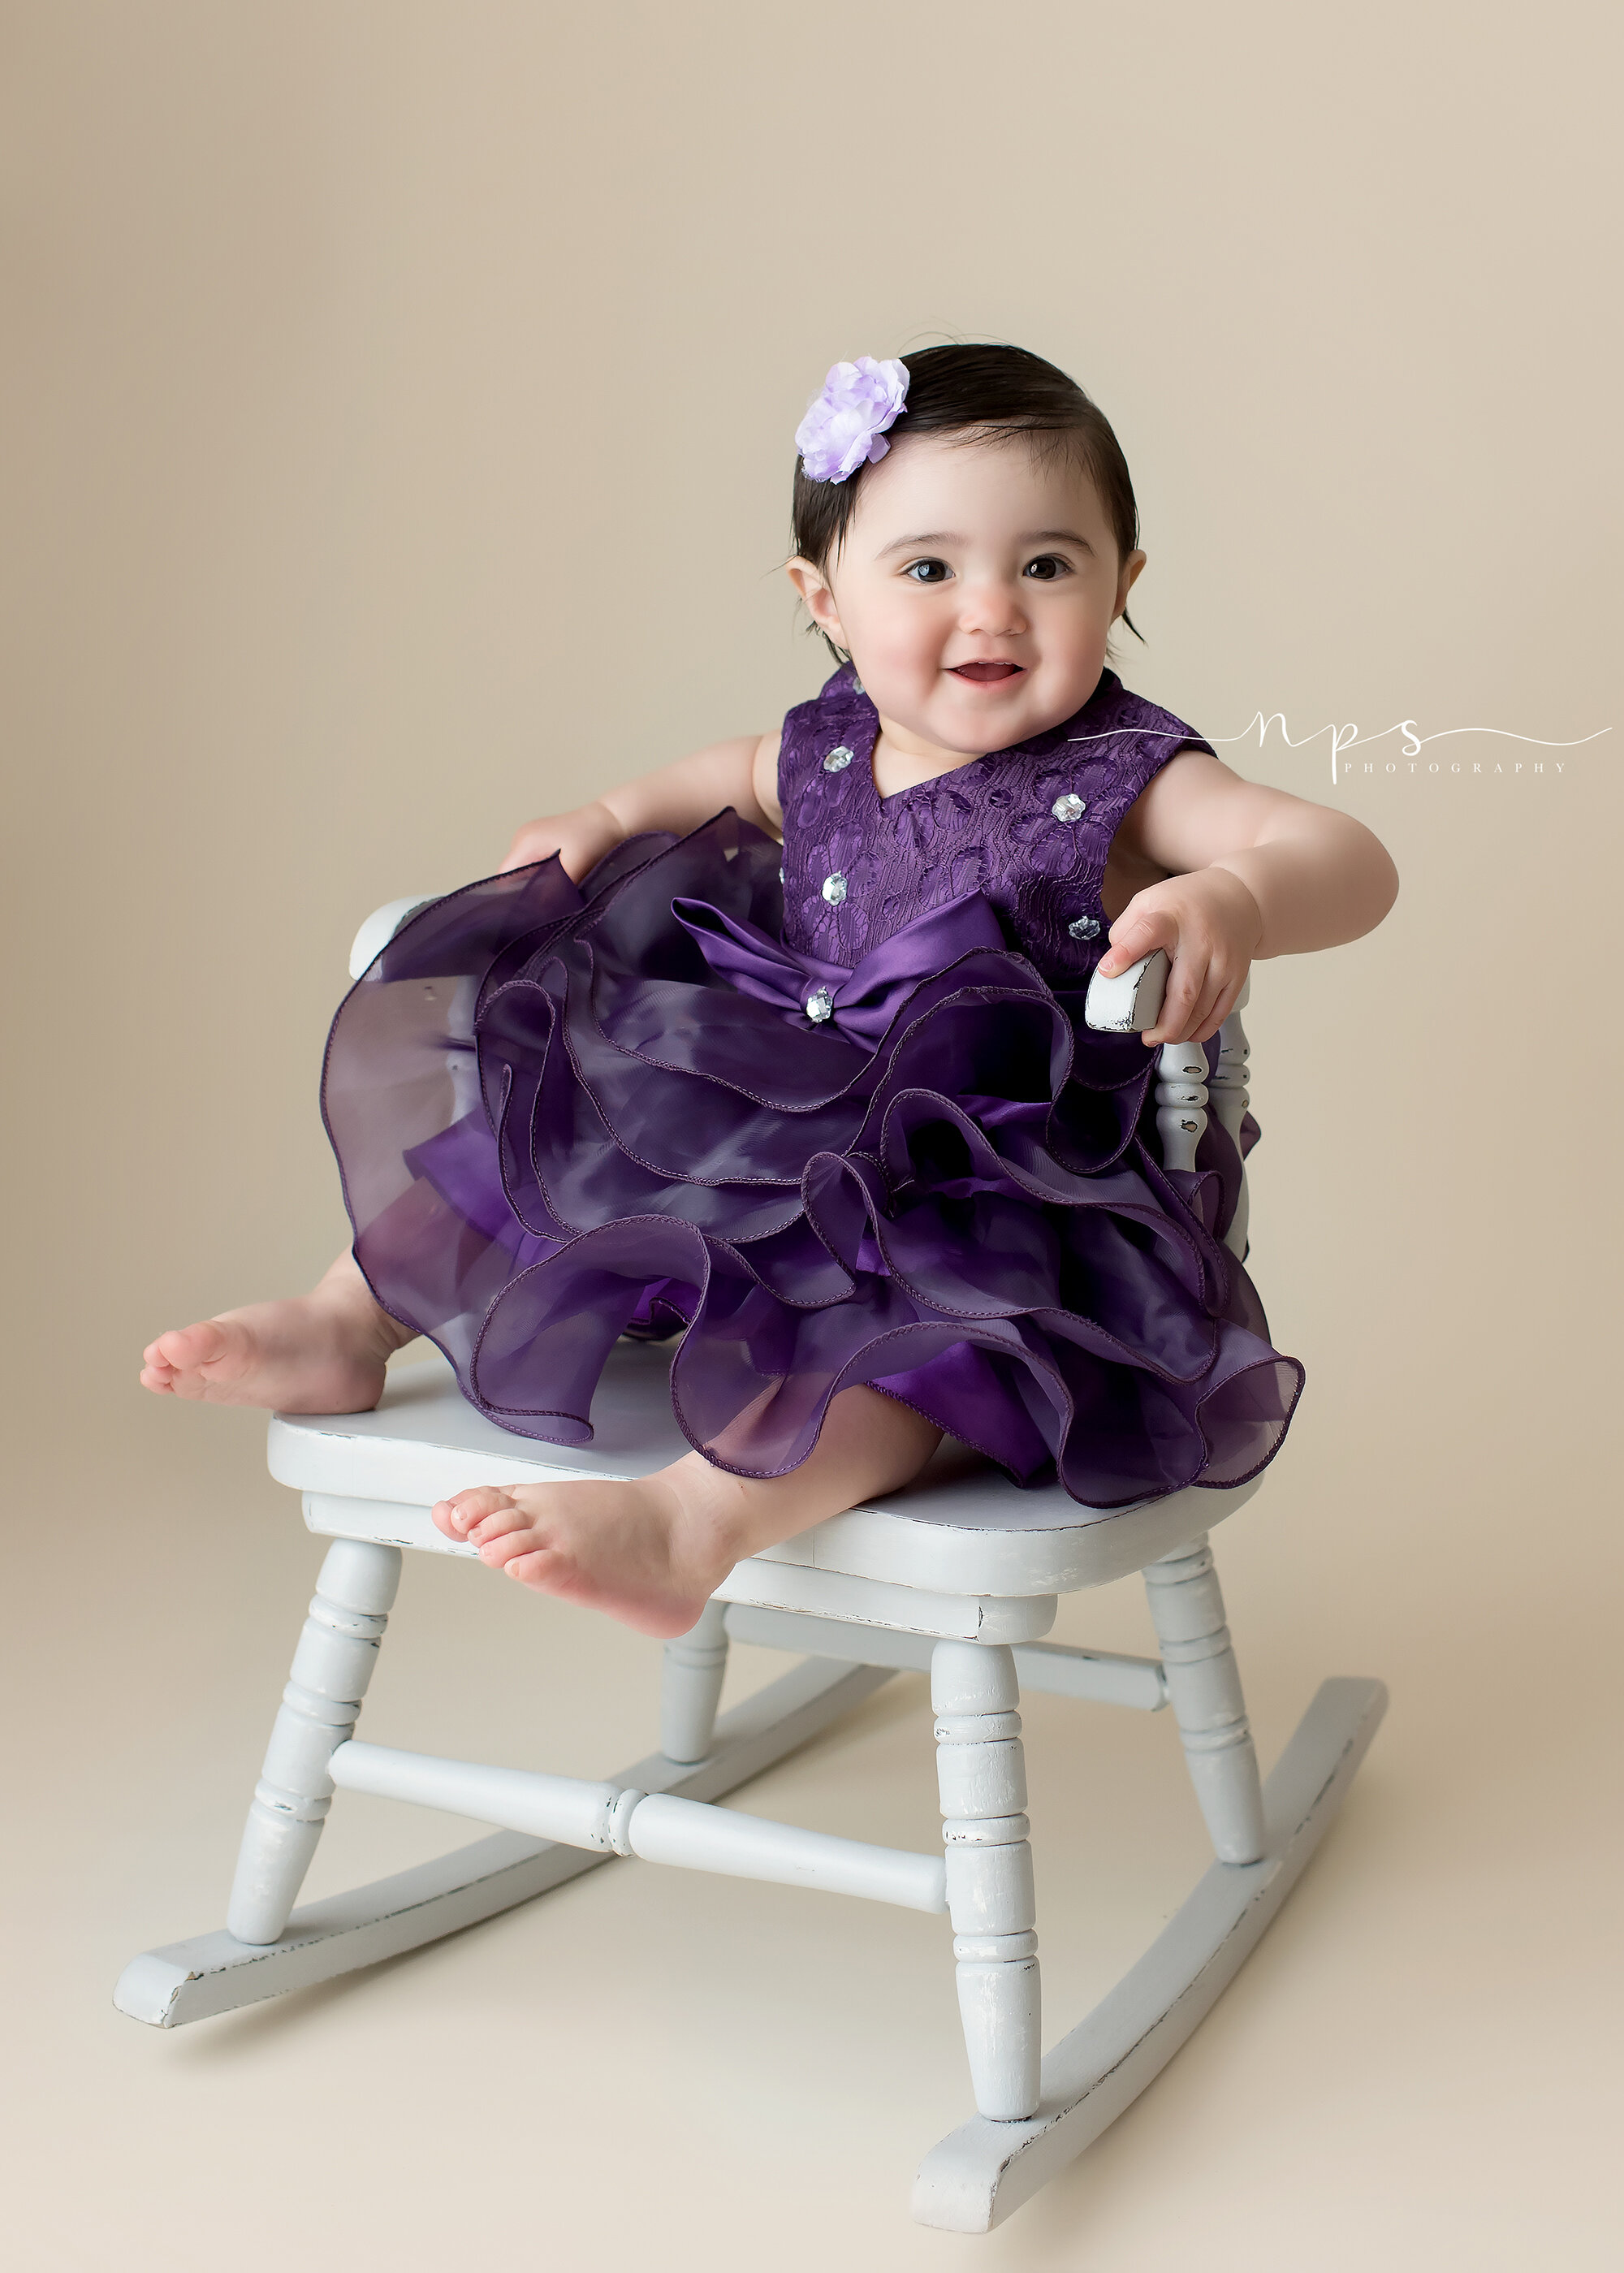 Best Baby Photographer Sanford 1 - NPS Photography